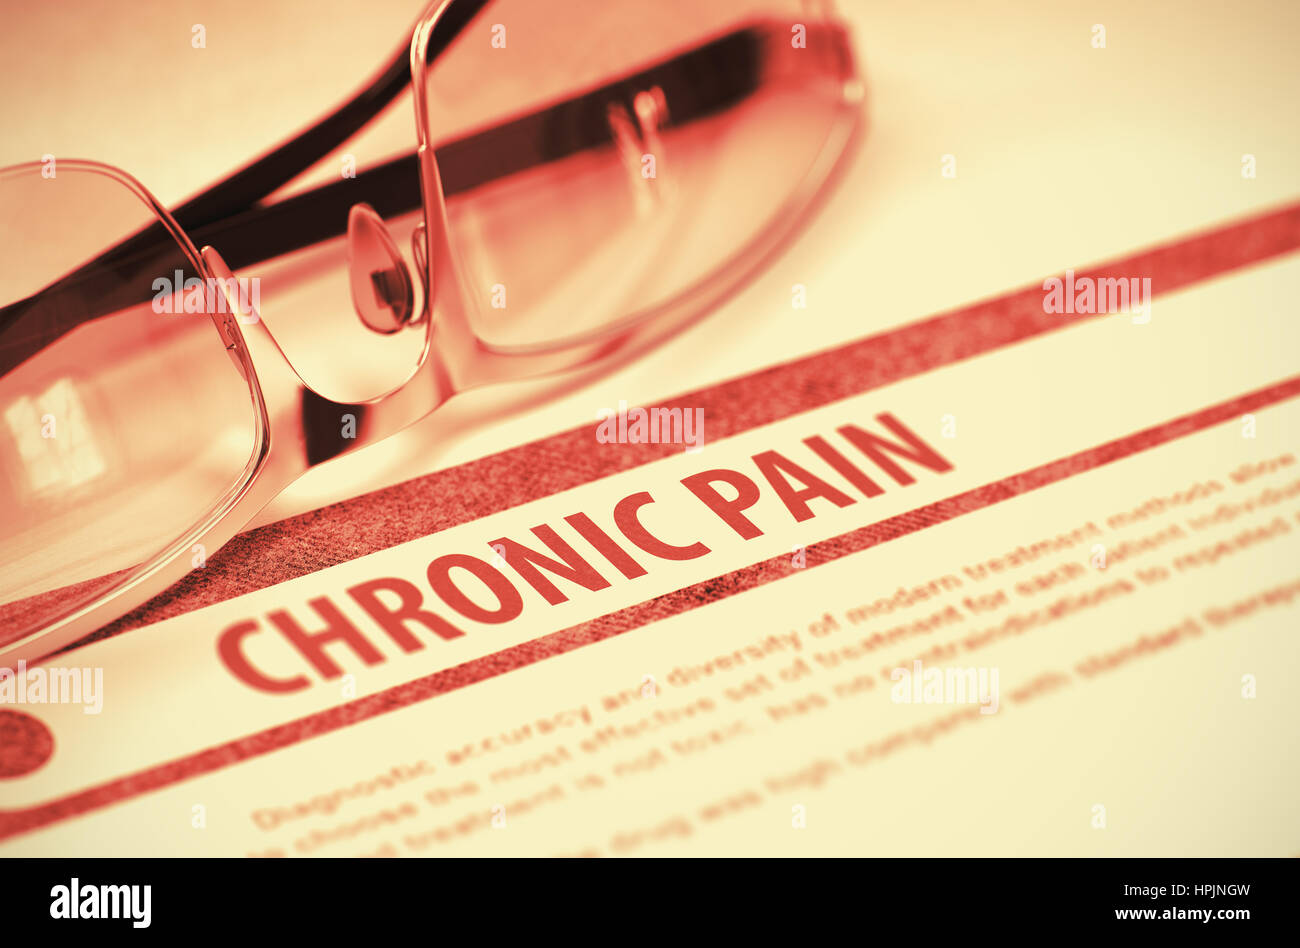 Diagnosis - Chronic Pain. Medical Concept. 3D Illustration. Stock Photo